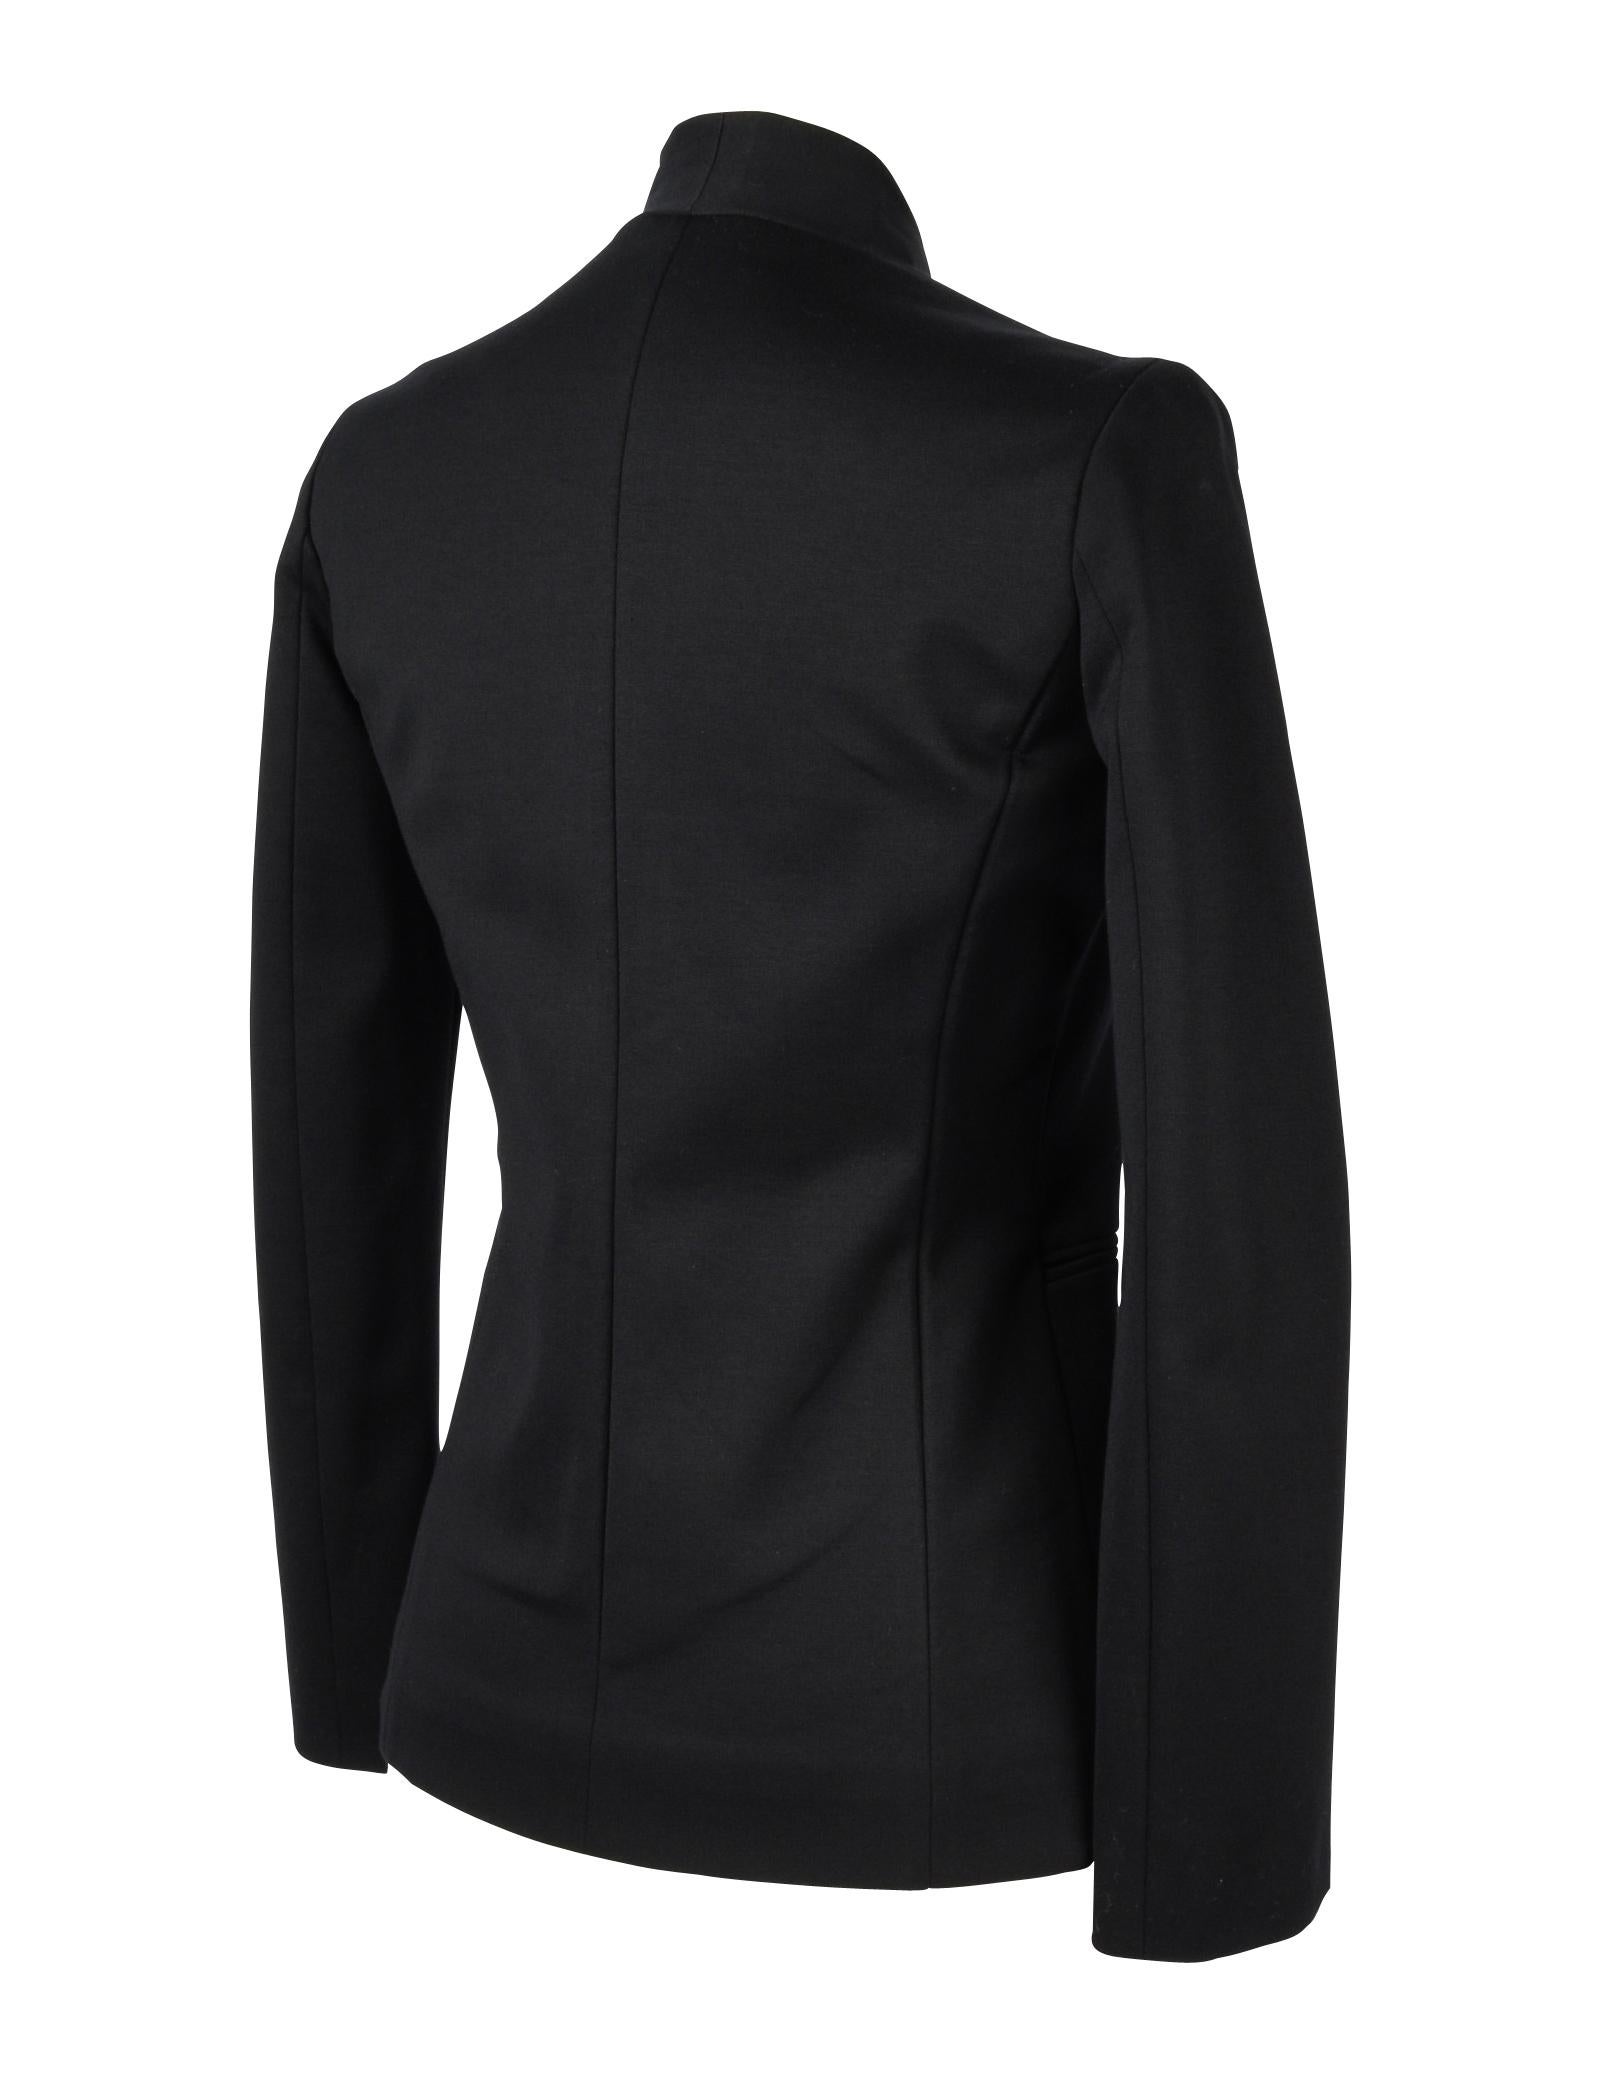 Gucci Jacket Modern Sleek Black Single Breast 38 / 6  4